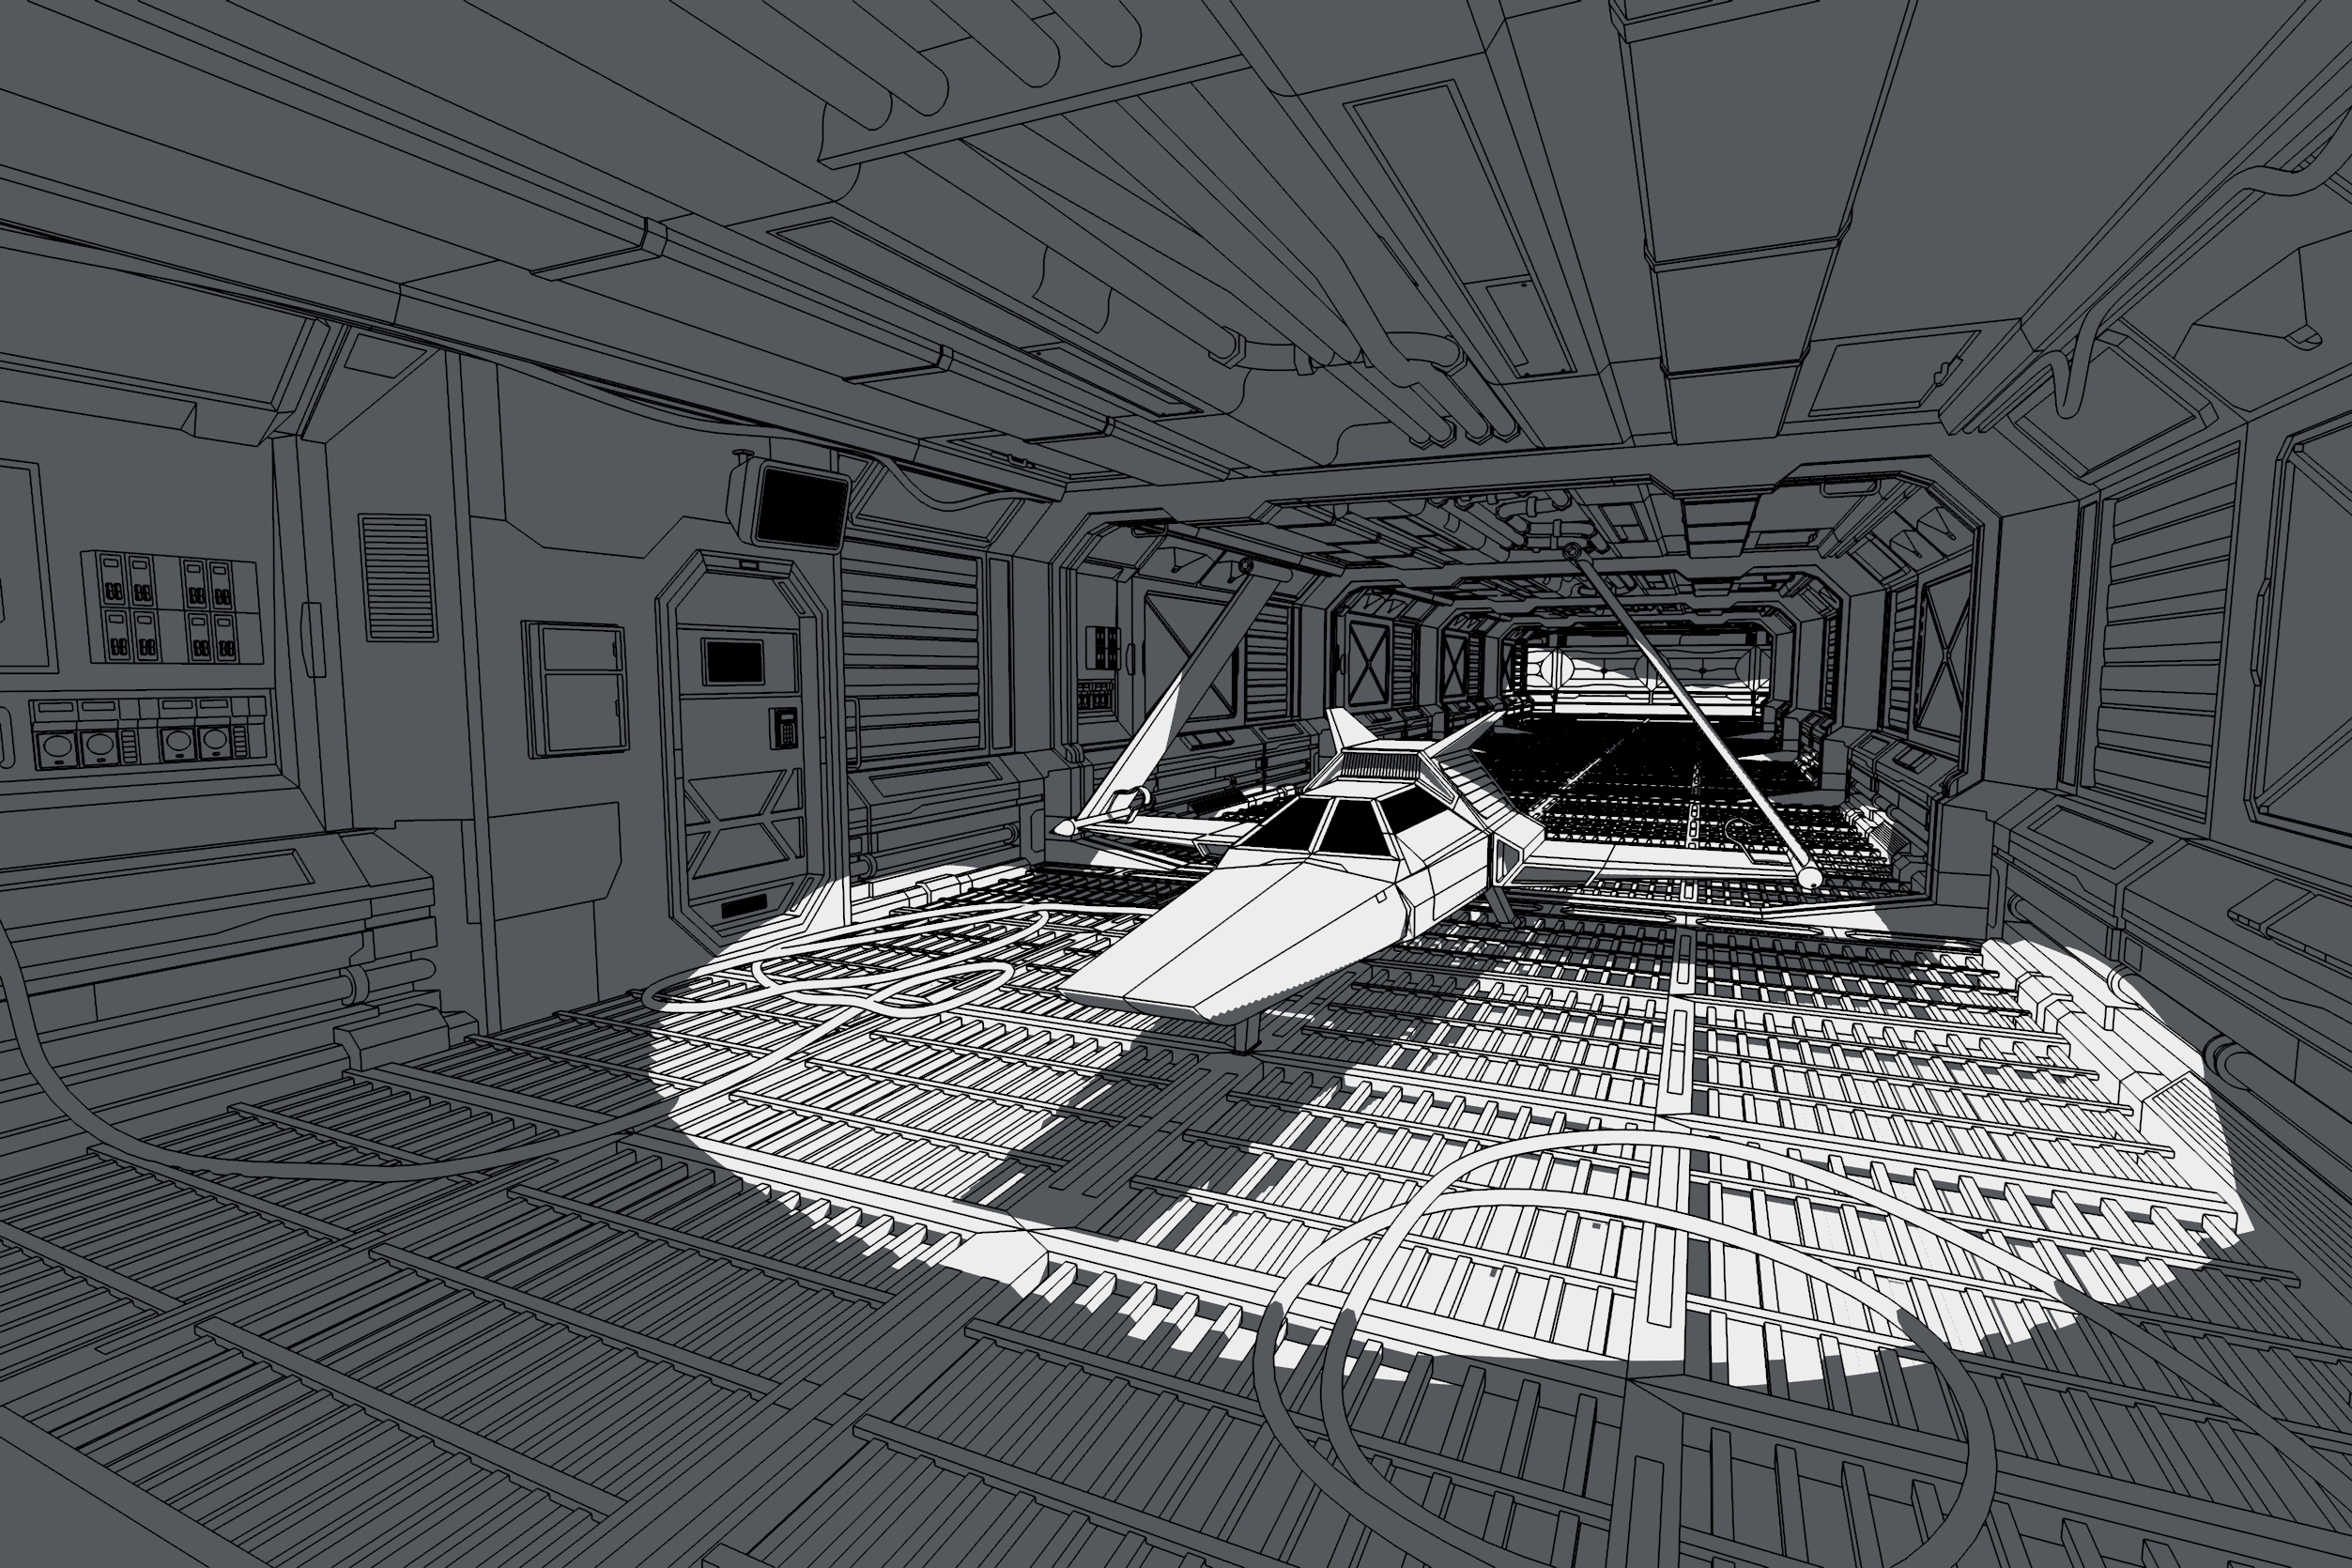 Spaceship scene, view 1